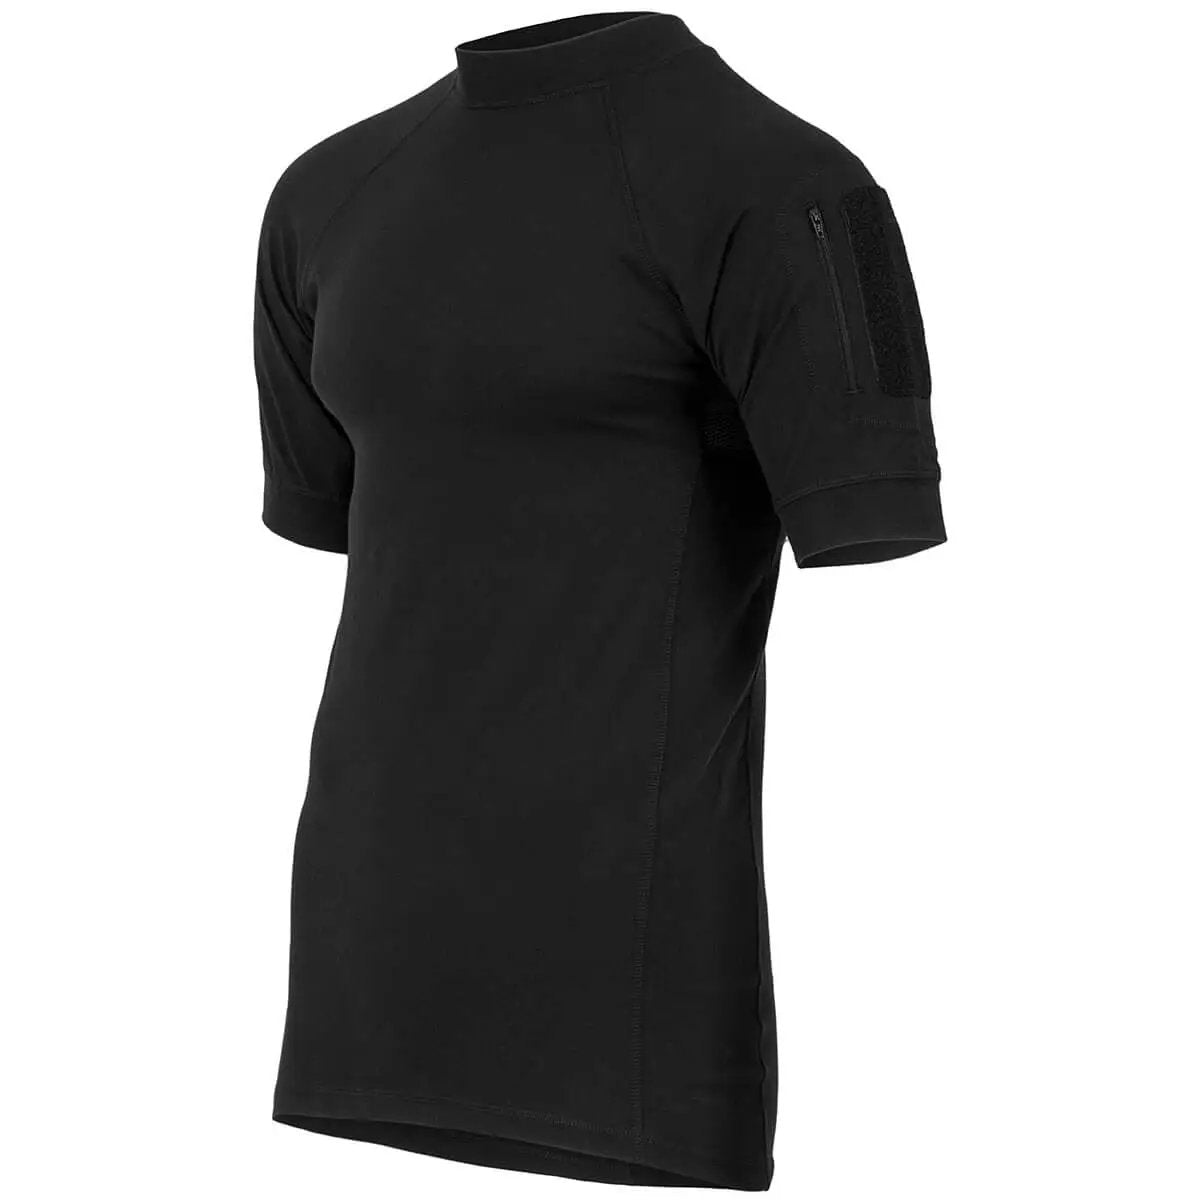 Highlander Combat T-Shirt - John Bull Clothing